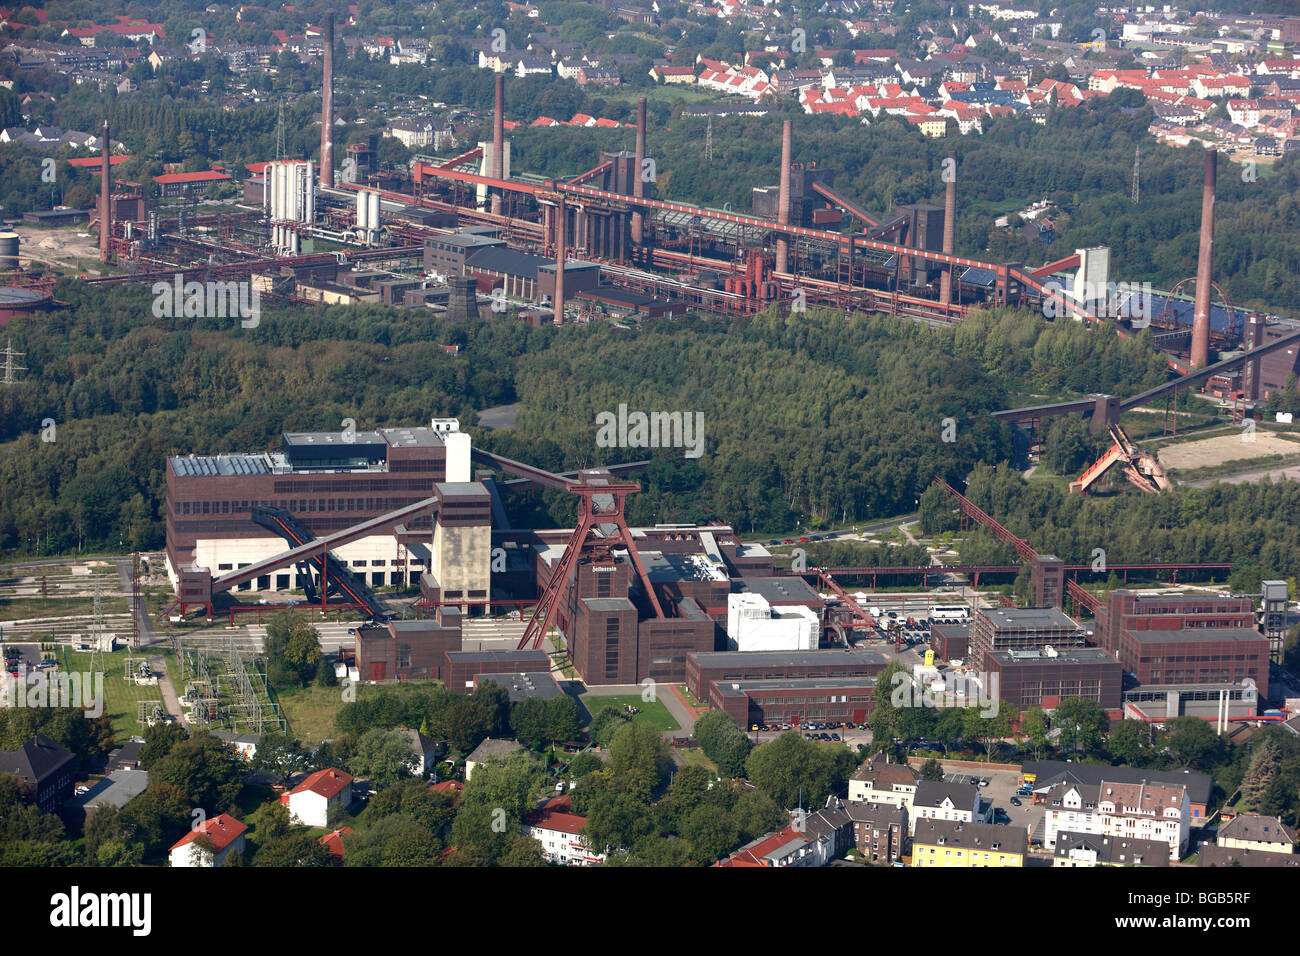 World Cultural Heritage, Zeche-Zollverien, Essen, NRW, Germany, Europe. Stock Photo